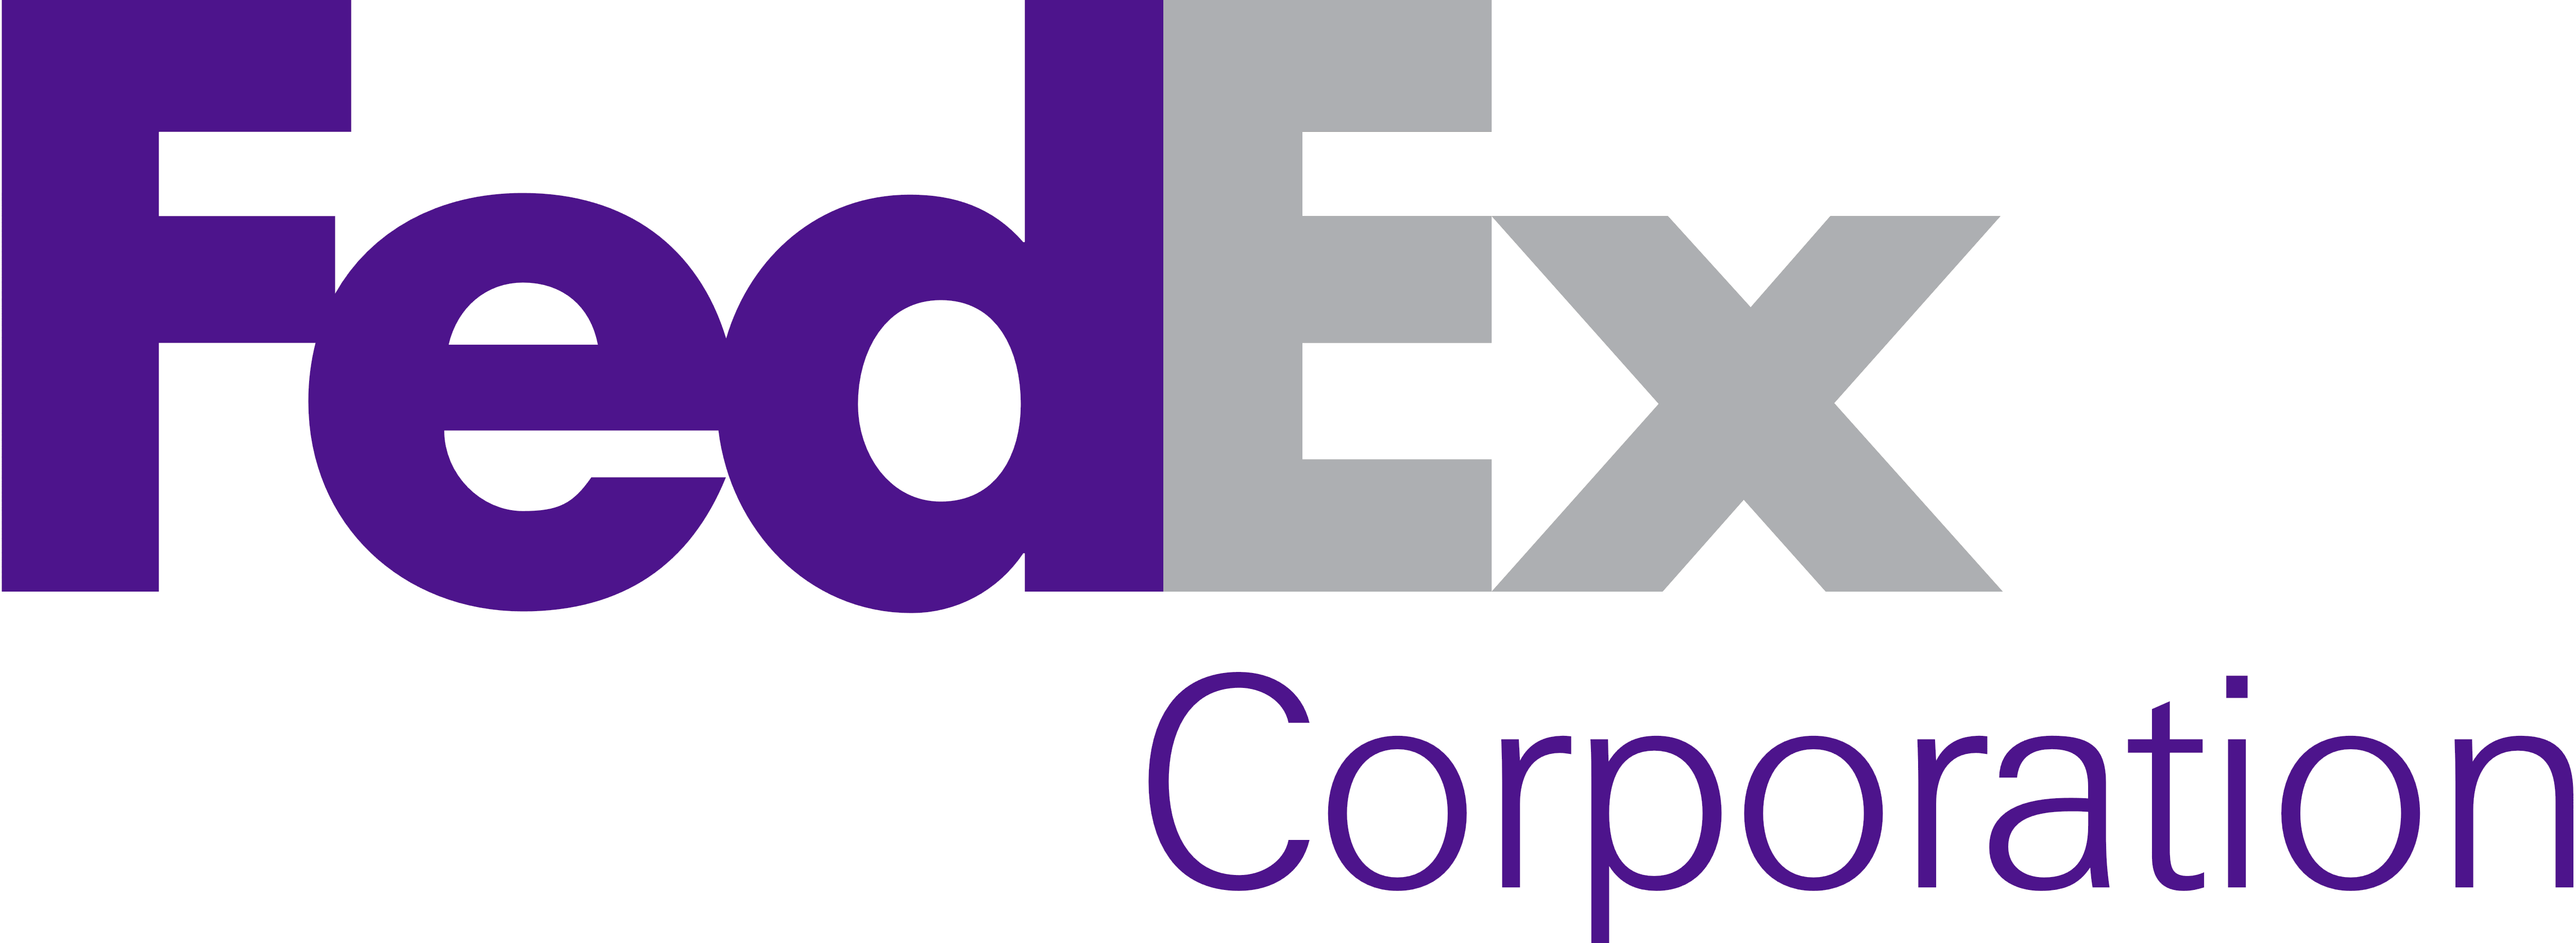 Fedex Logo PNG Pic